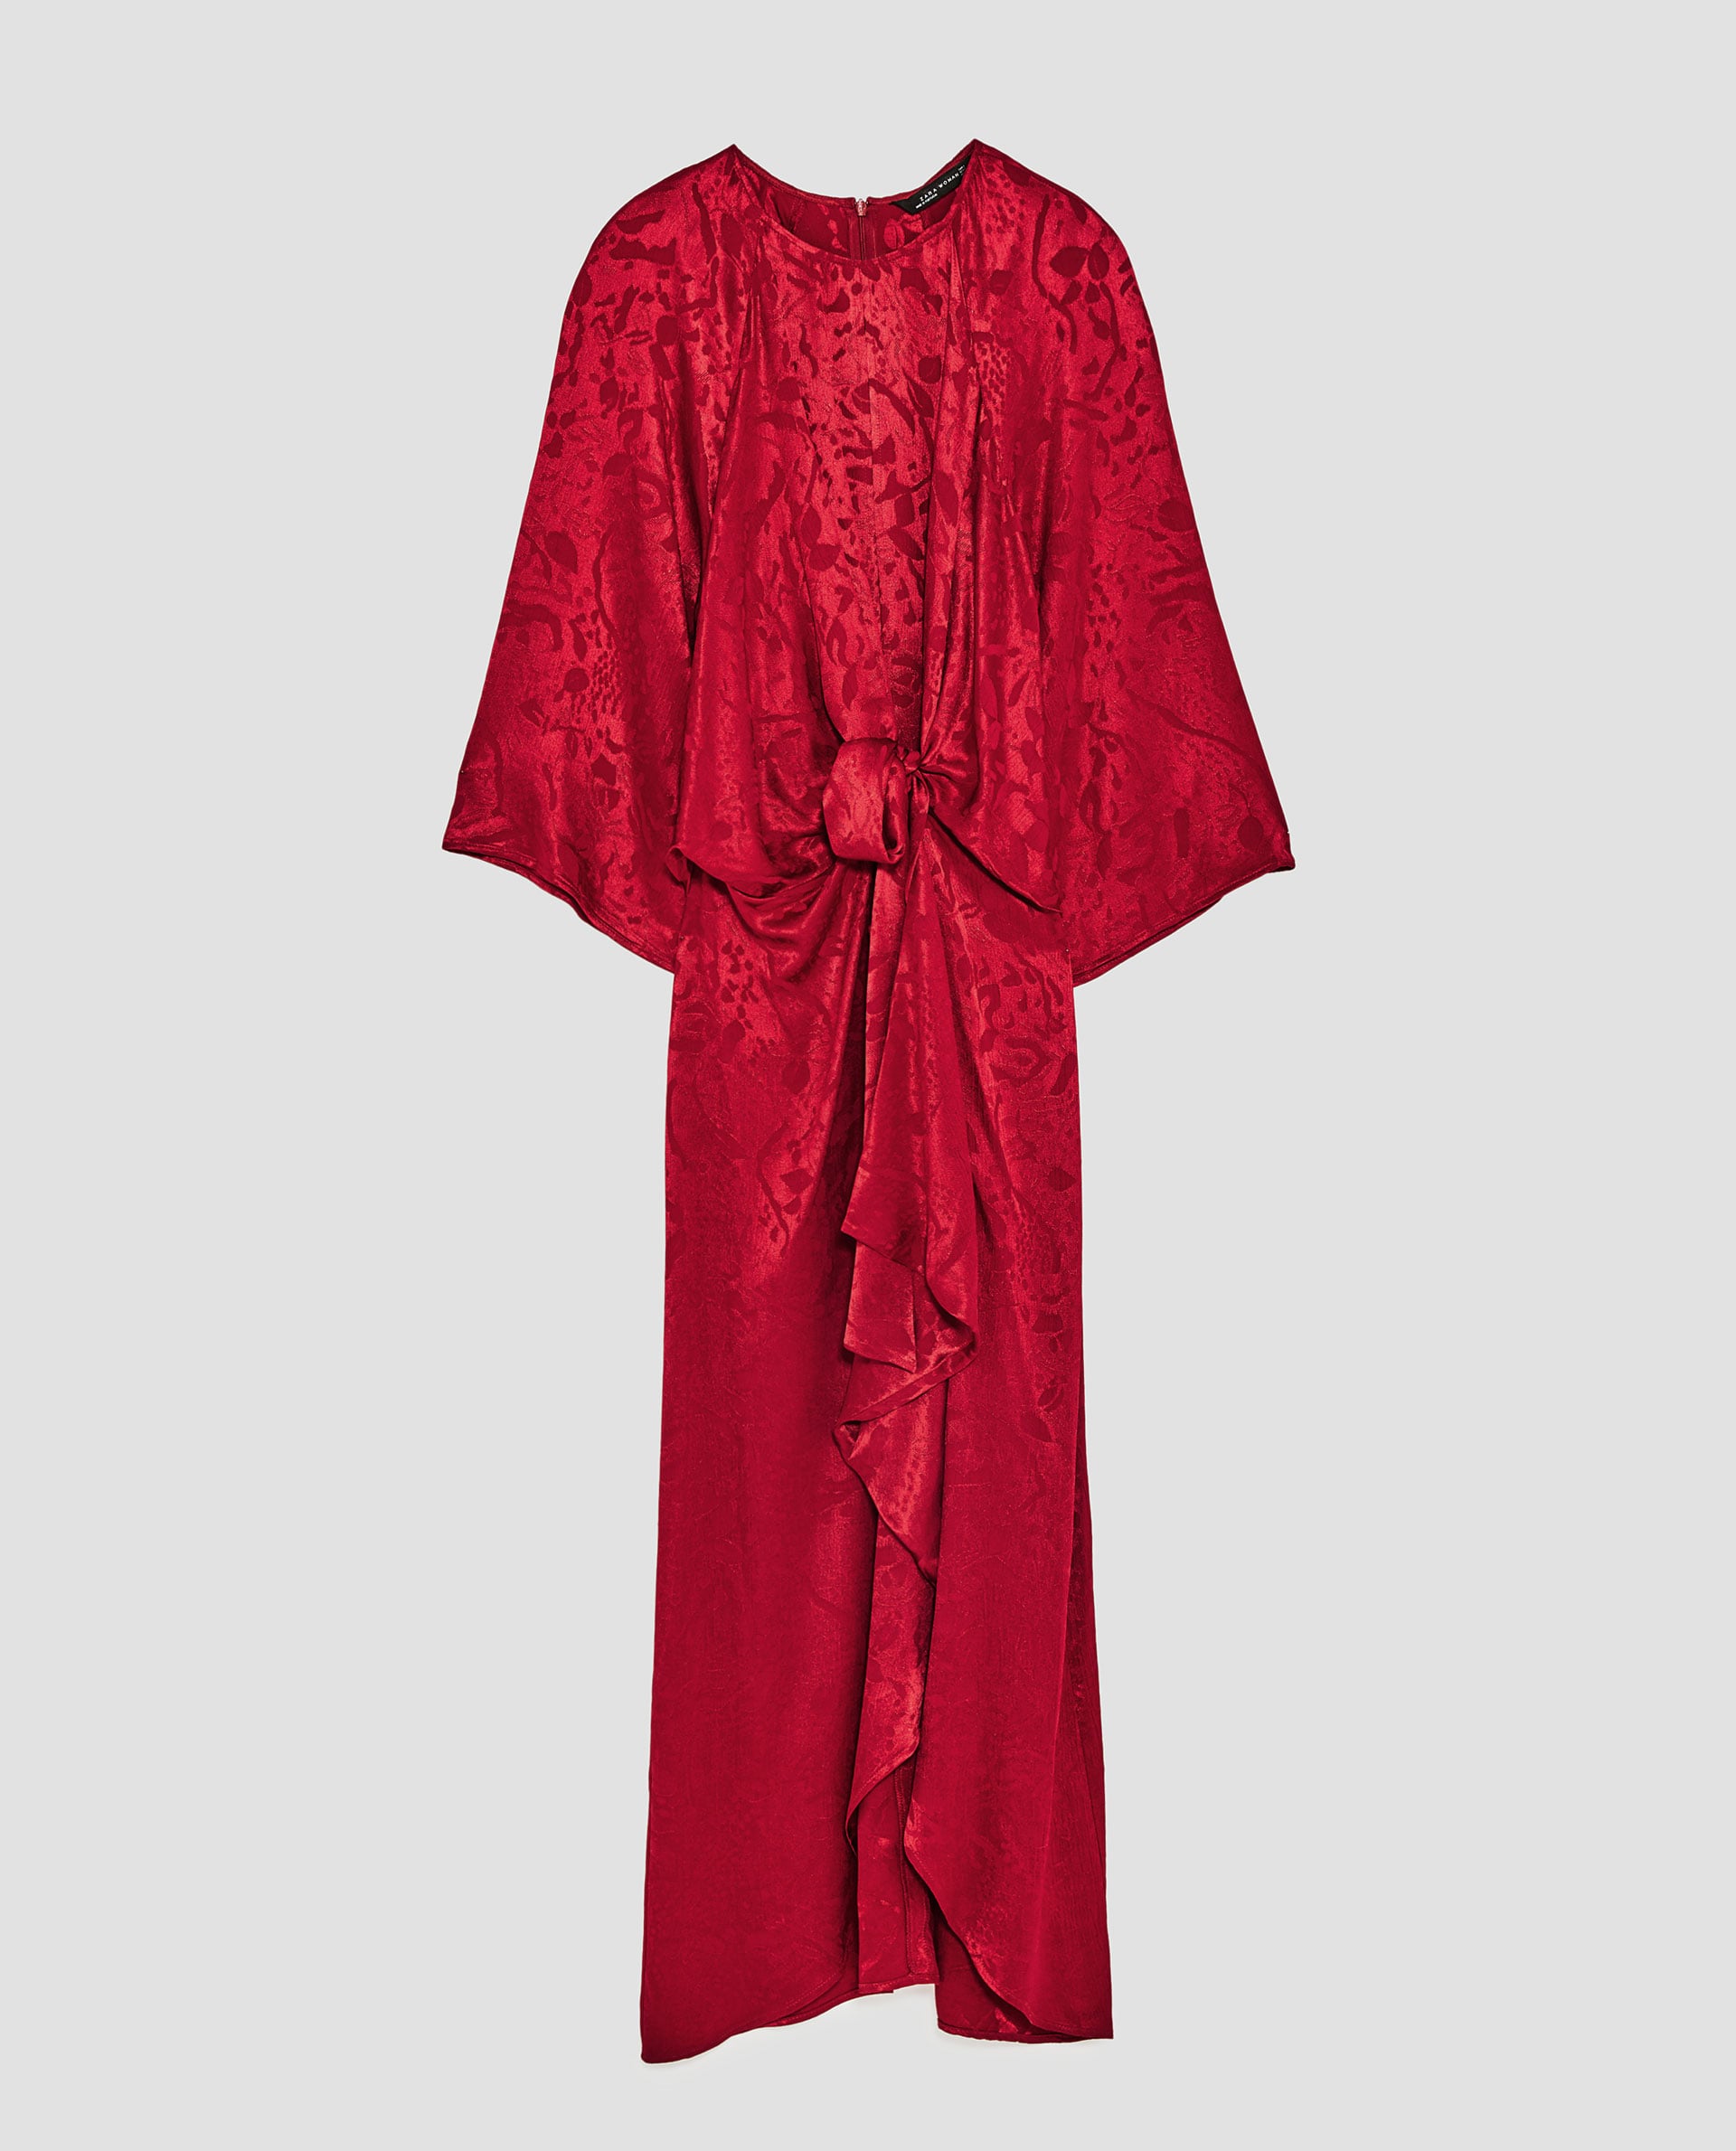 zara red jacquard dress